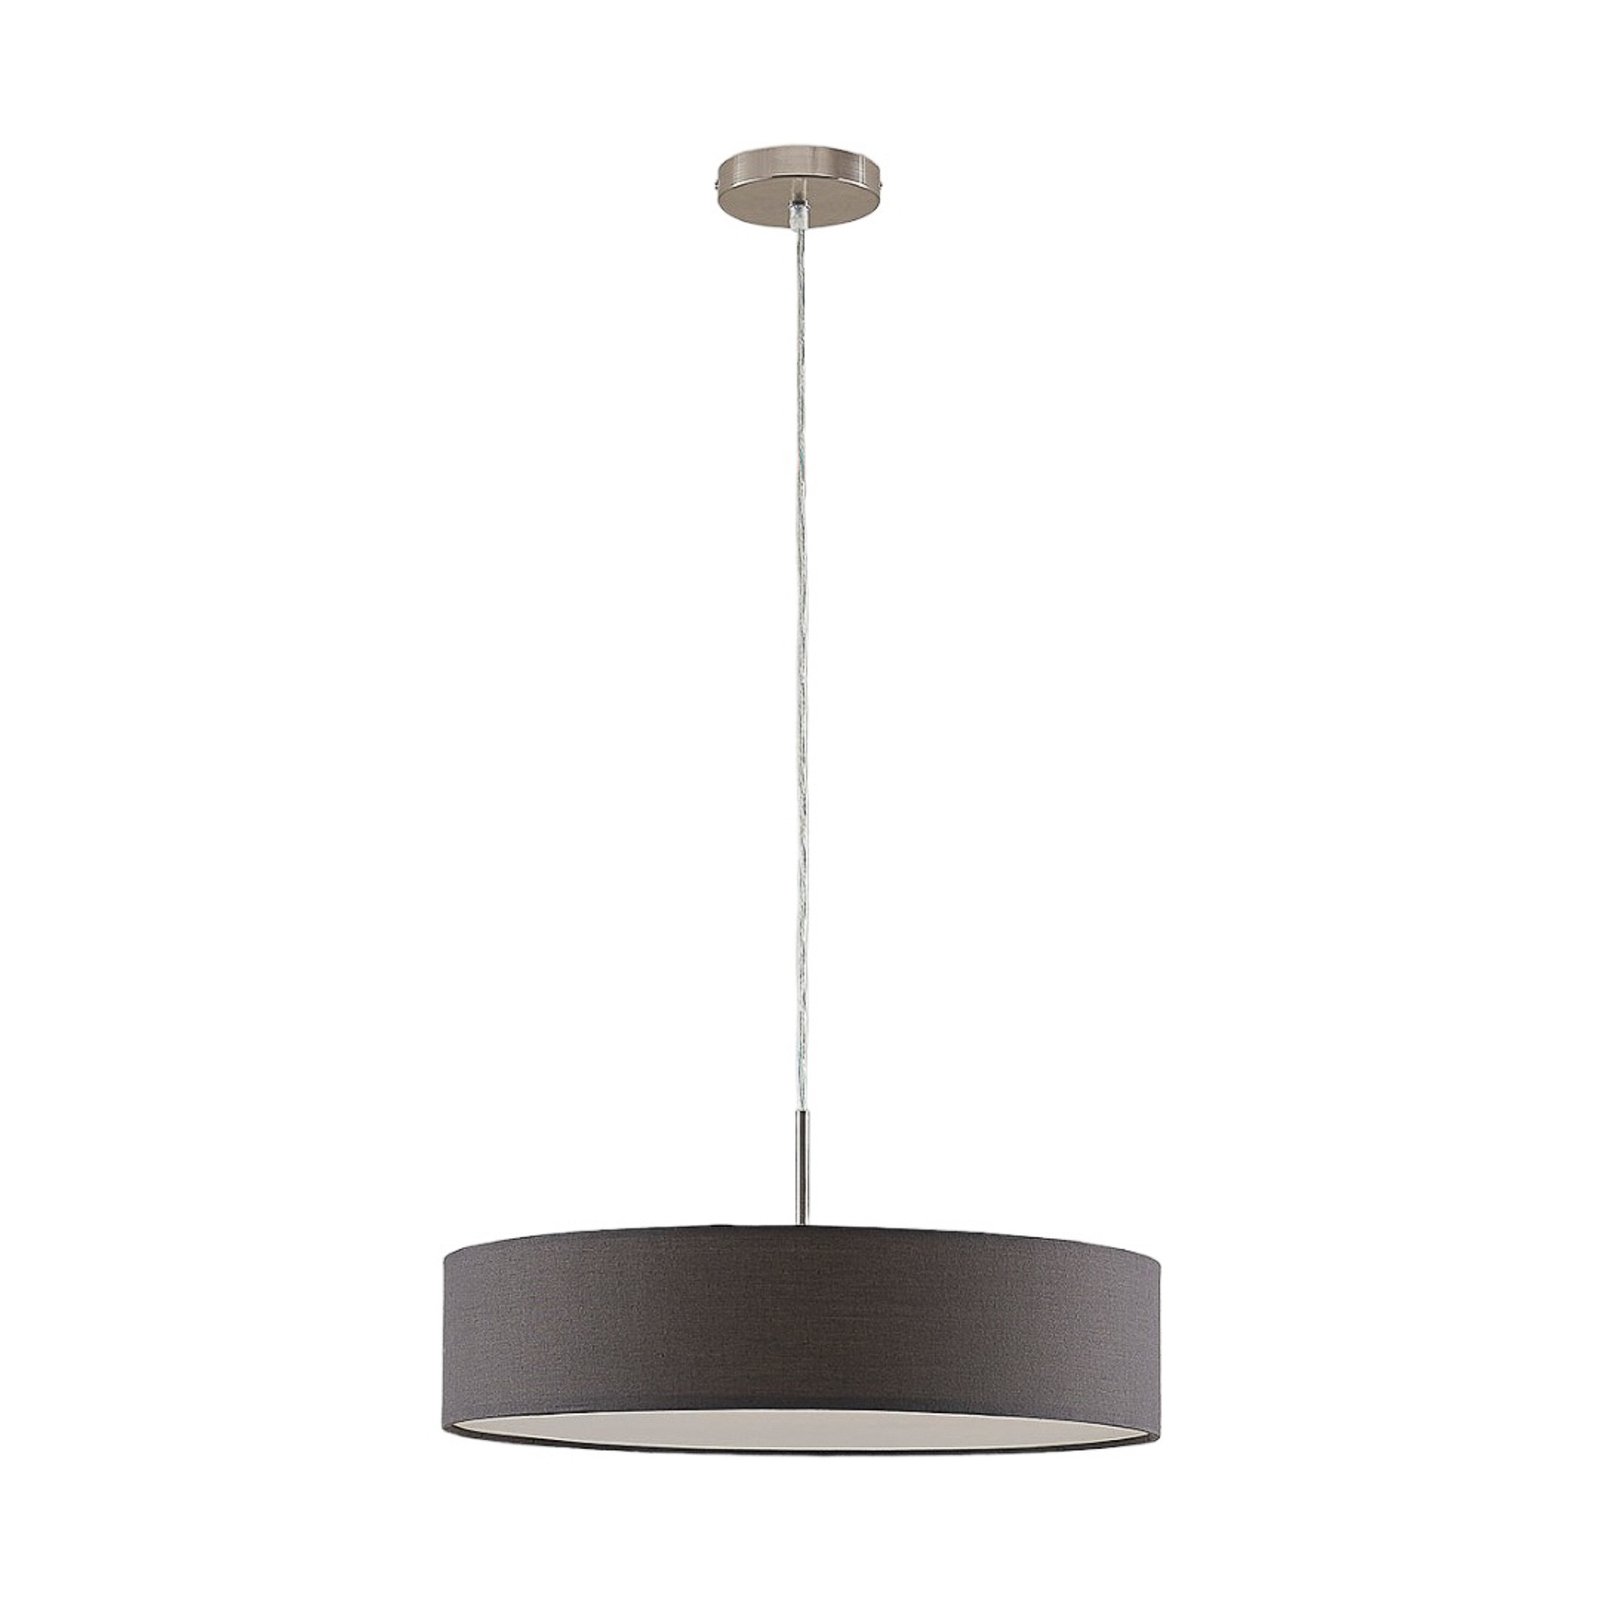 Lindby hanglamp Sebatin, Ø 50 cm, grijs, stof, E27